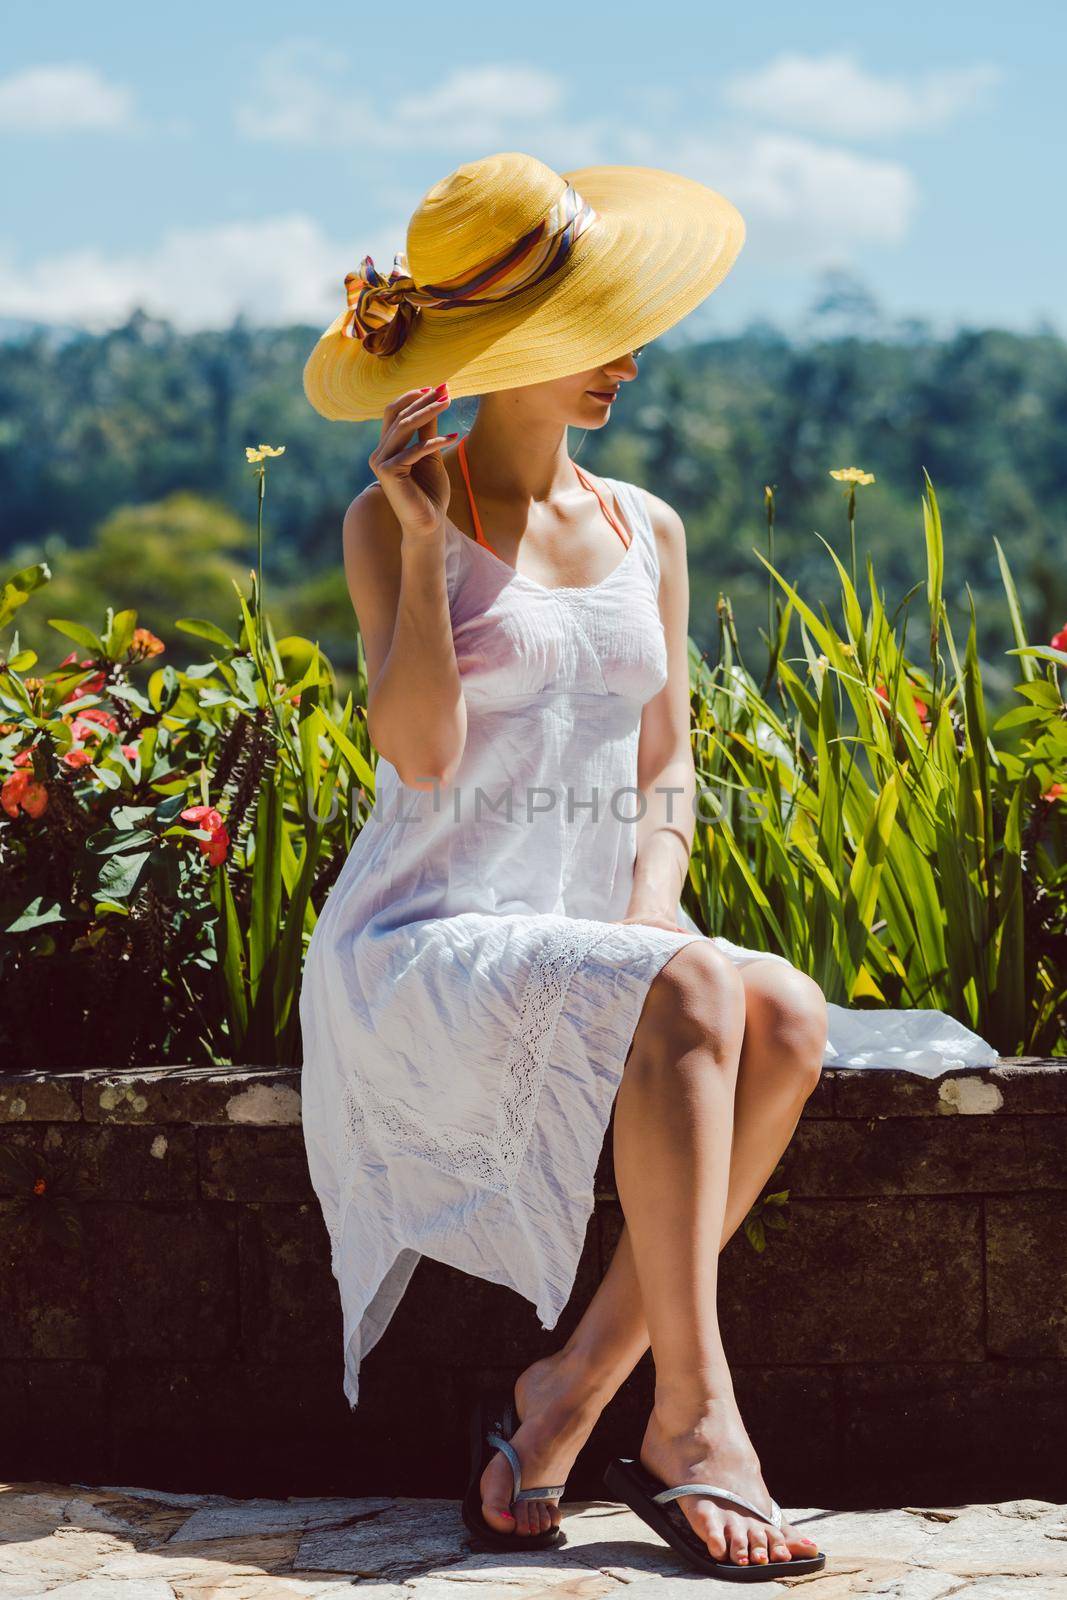 Woman sitting in tropical garden enjoying the sun amid the lush green